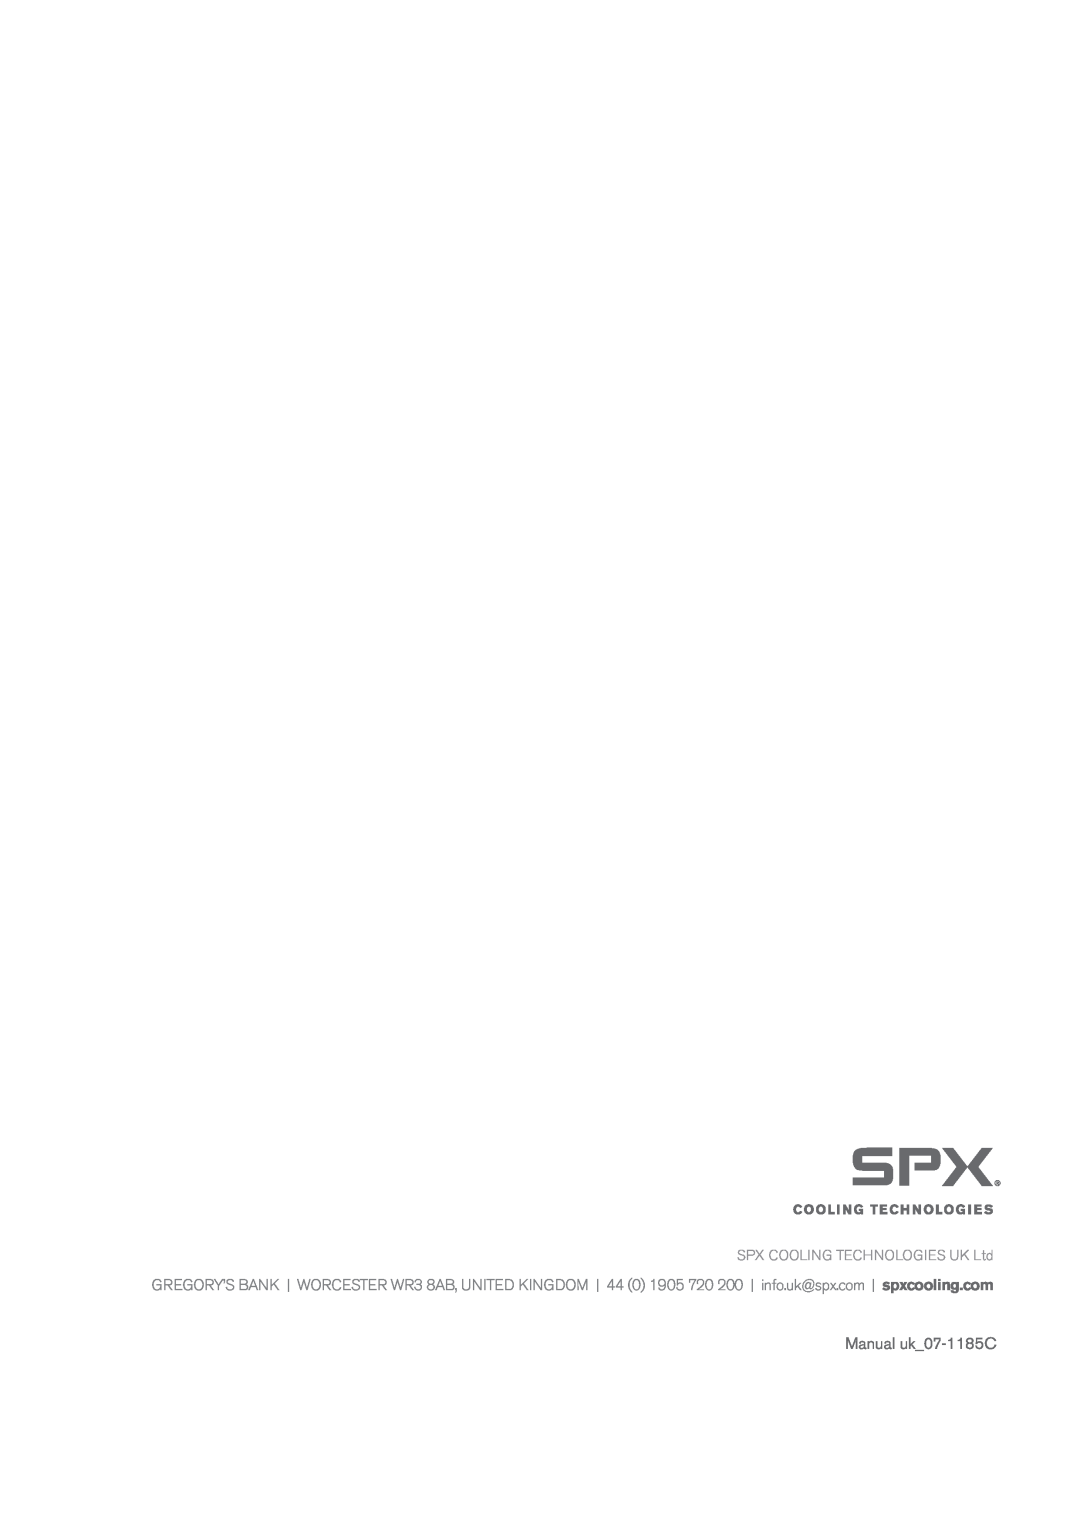 SPX Cooling Technologies none user manual Manual uk 07-1185C 